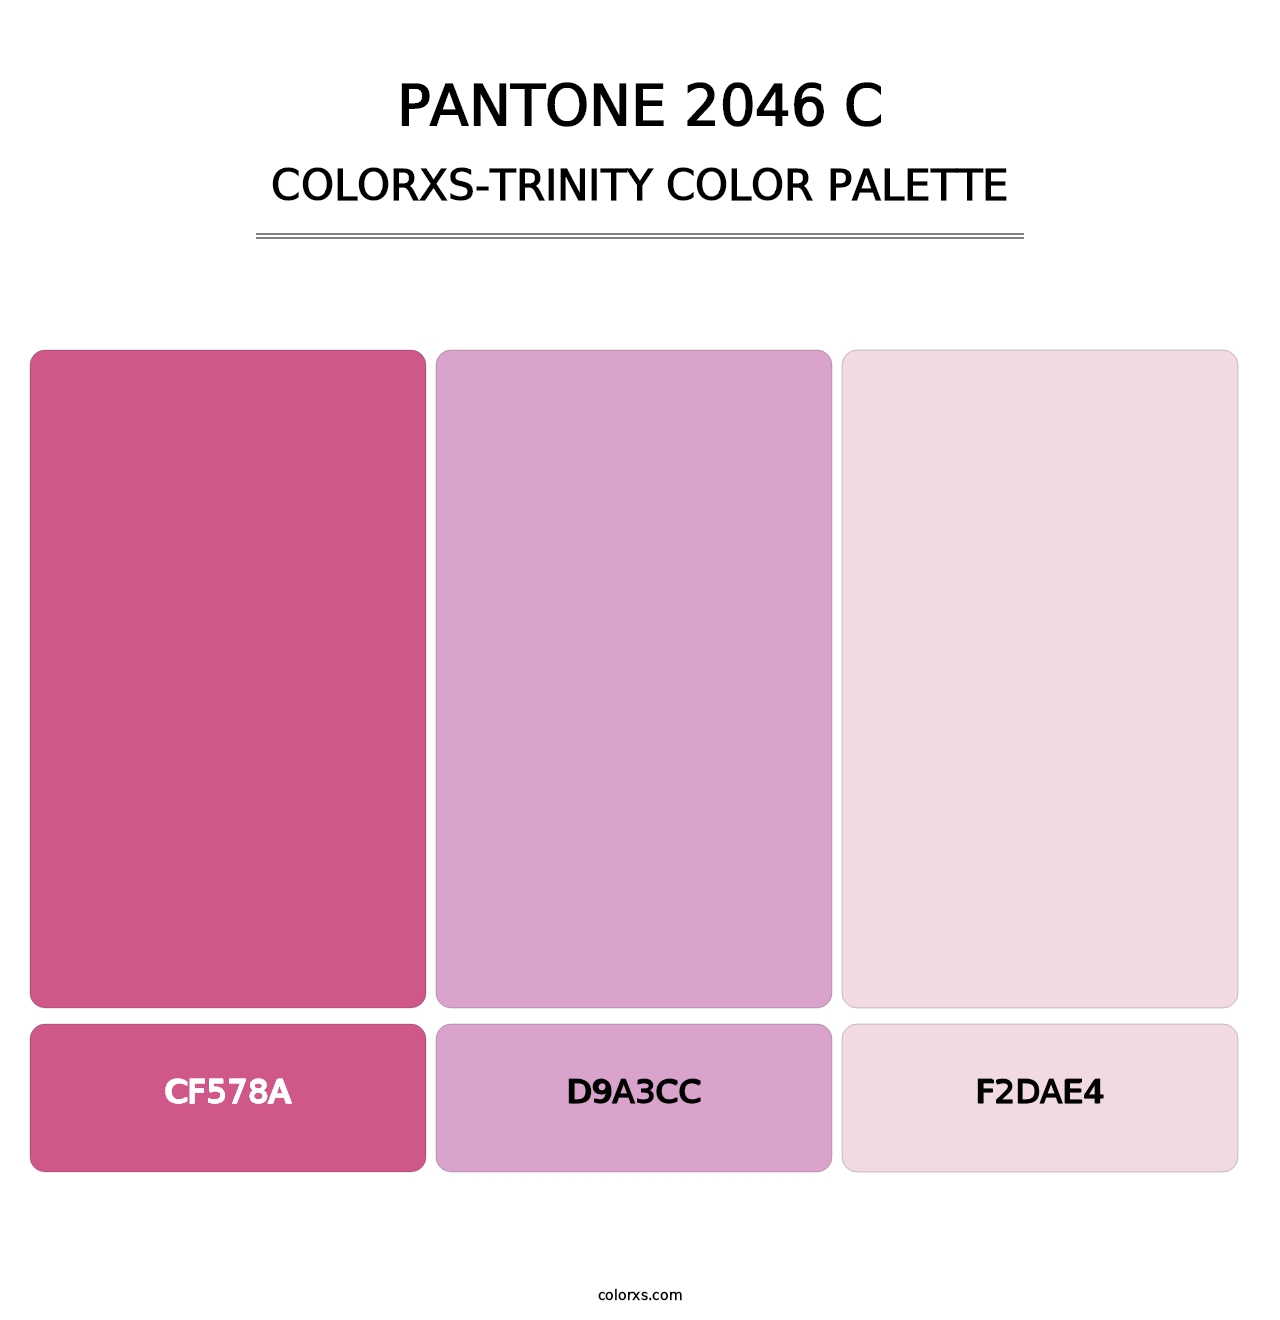 PANTONE 2046 C - Colorxs Trinity Palette